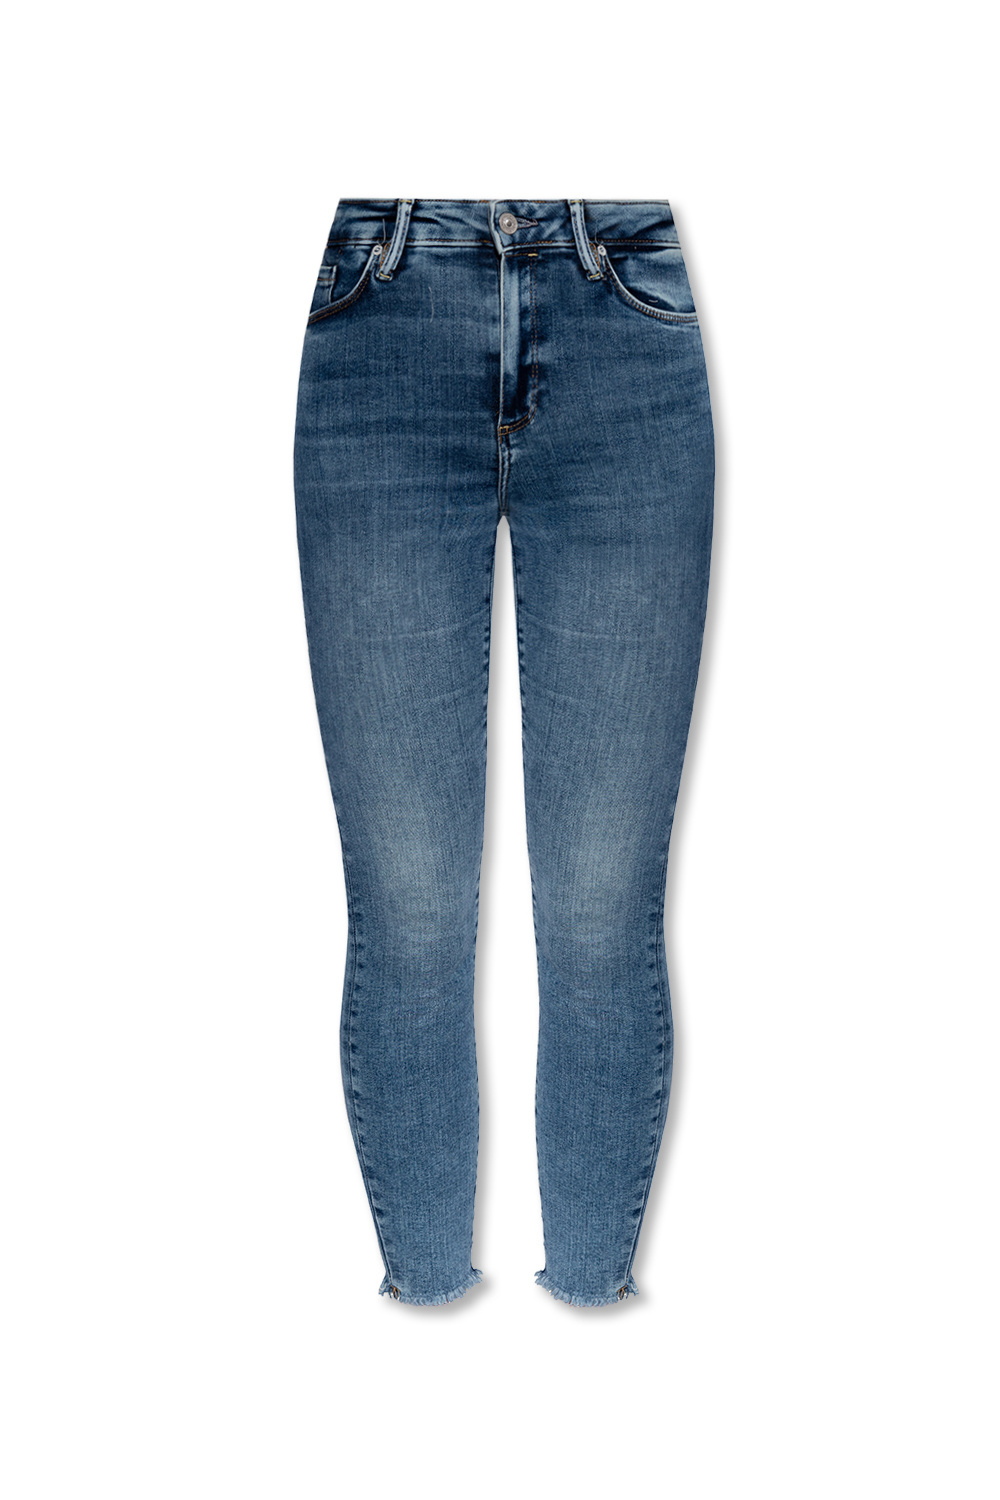 AllSaints ‘Miller’ skinny jeans